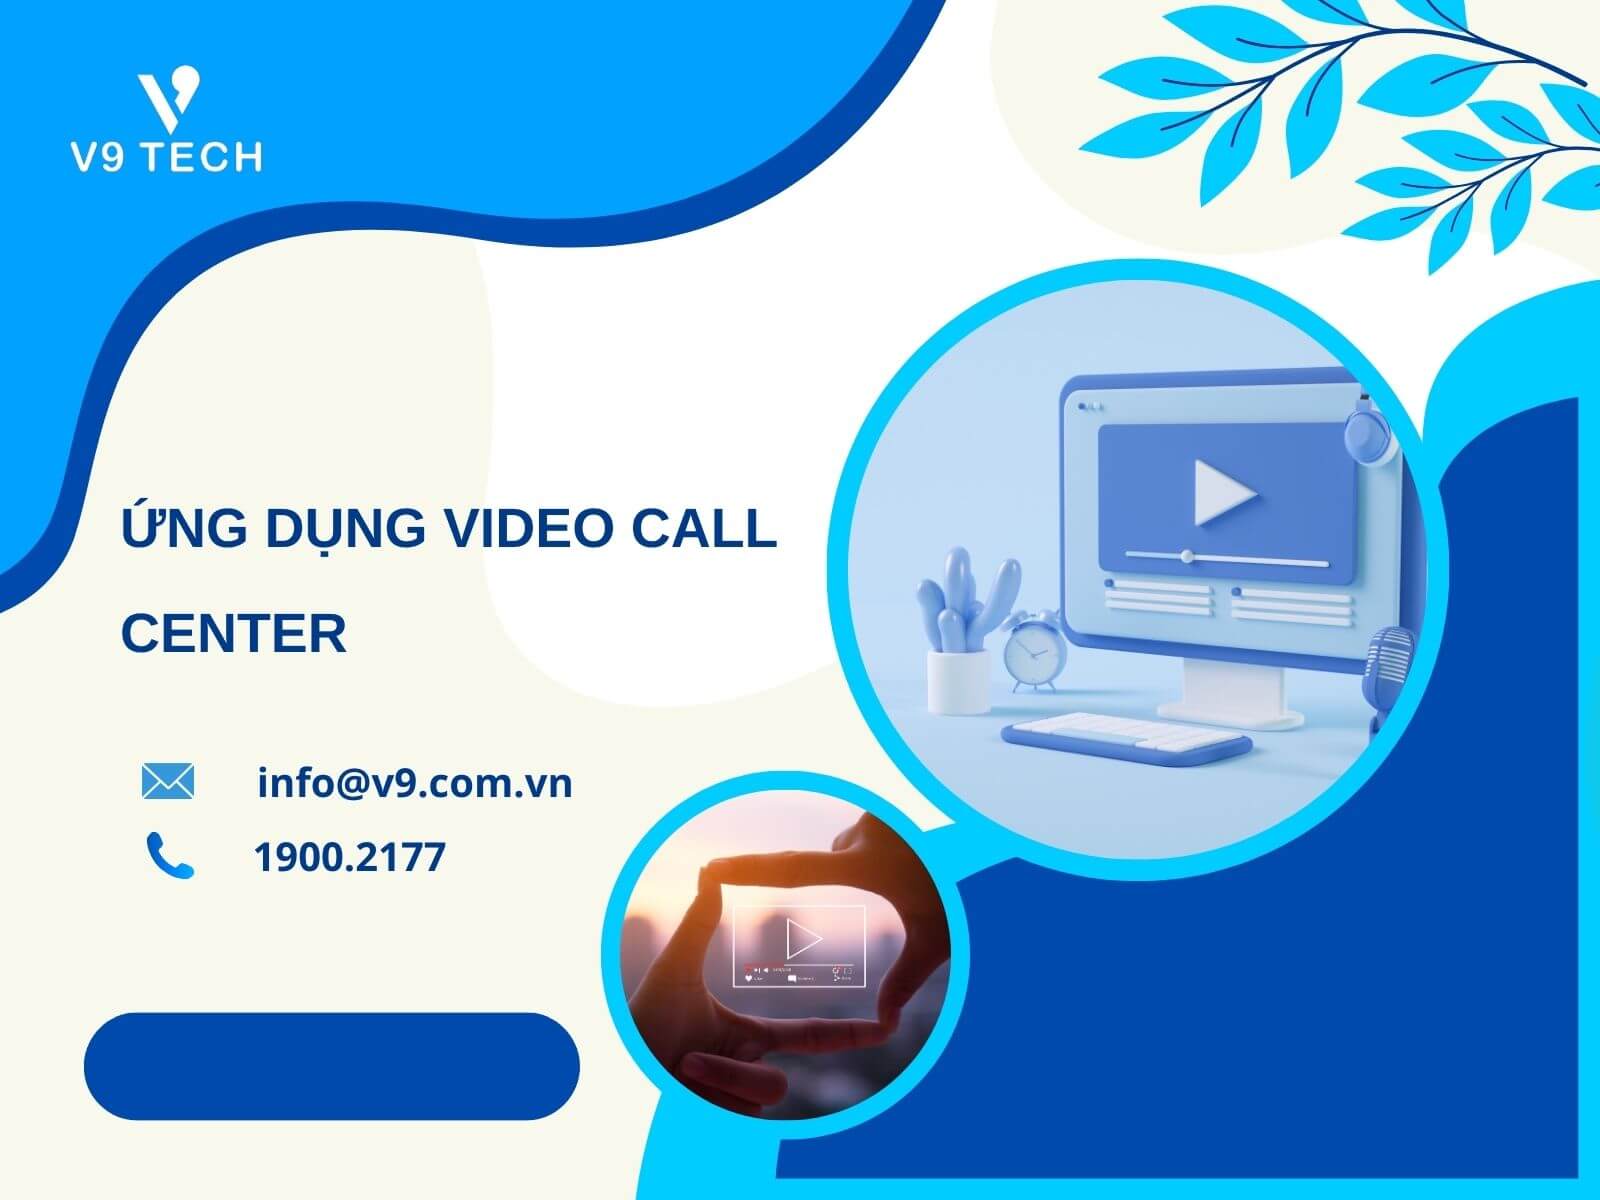 ung dung video call center